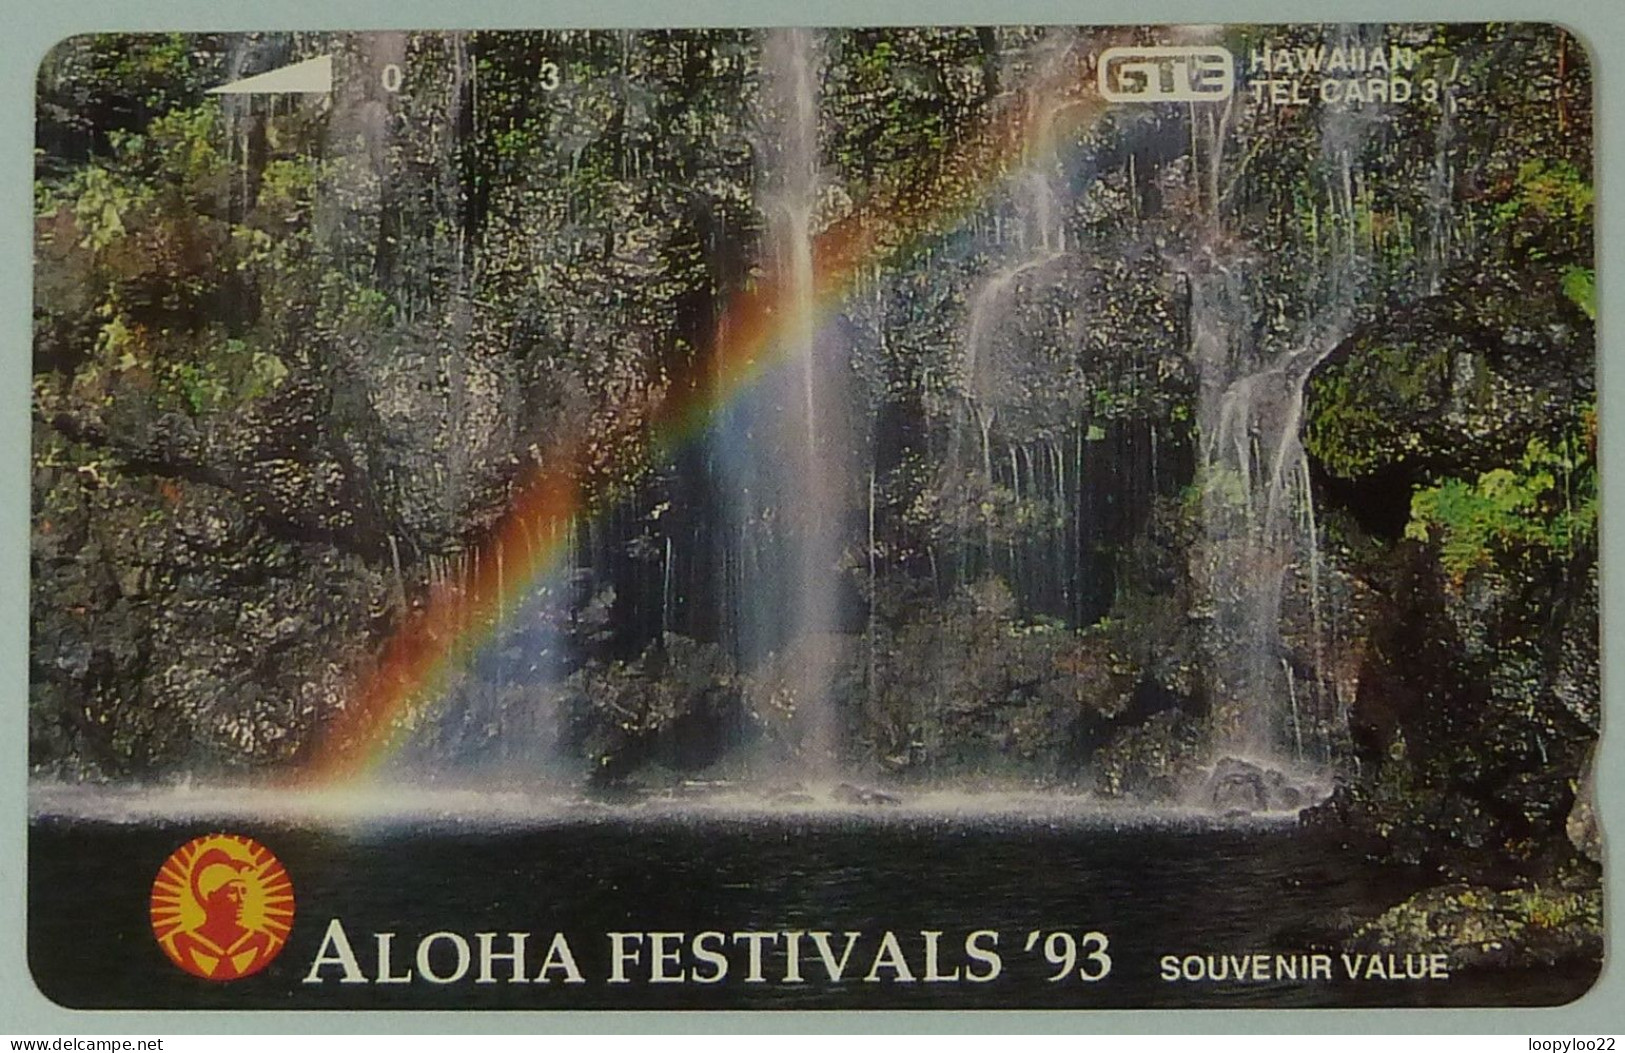 HAWAII - Tamura - Aloha Festivals '93 - Rainbow Falls - Mint - Hawaii